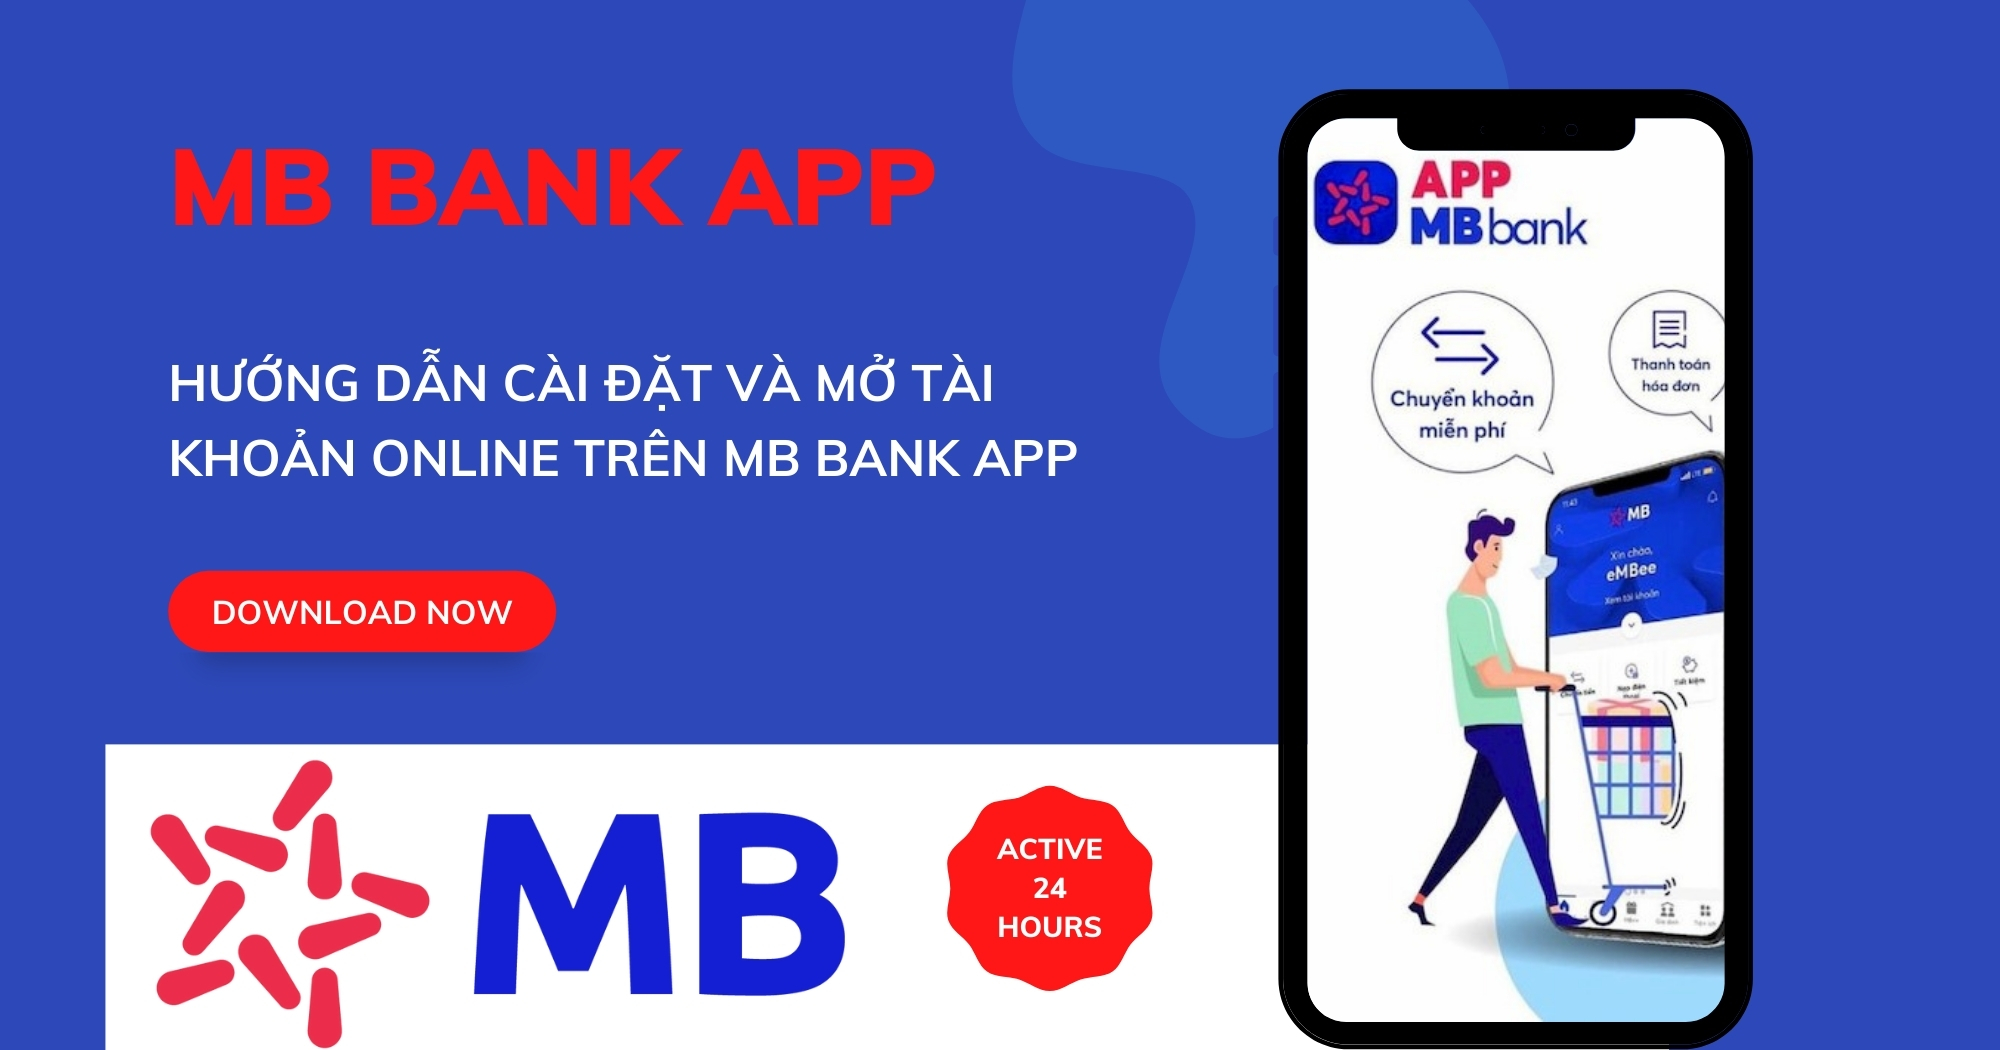 Giao diện của App MB Bank 